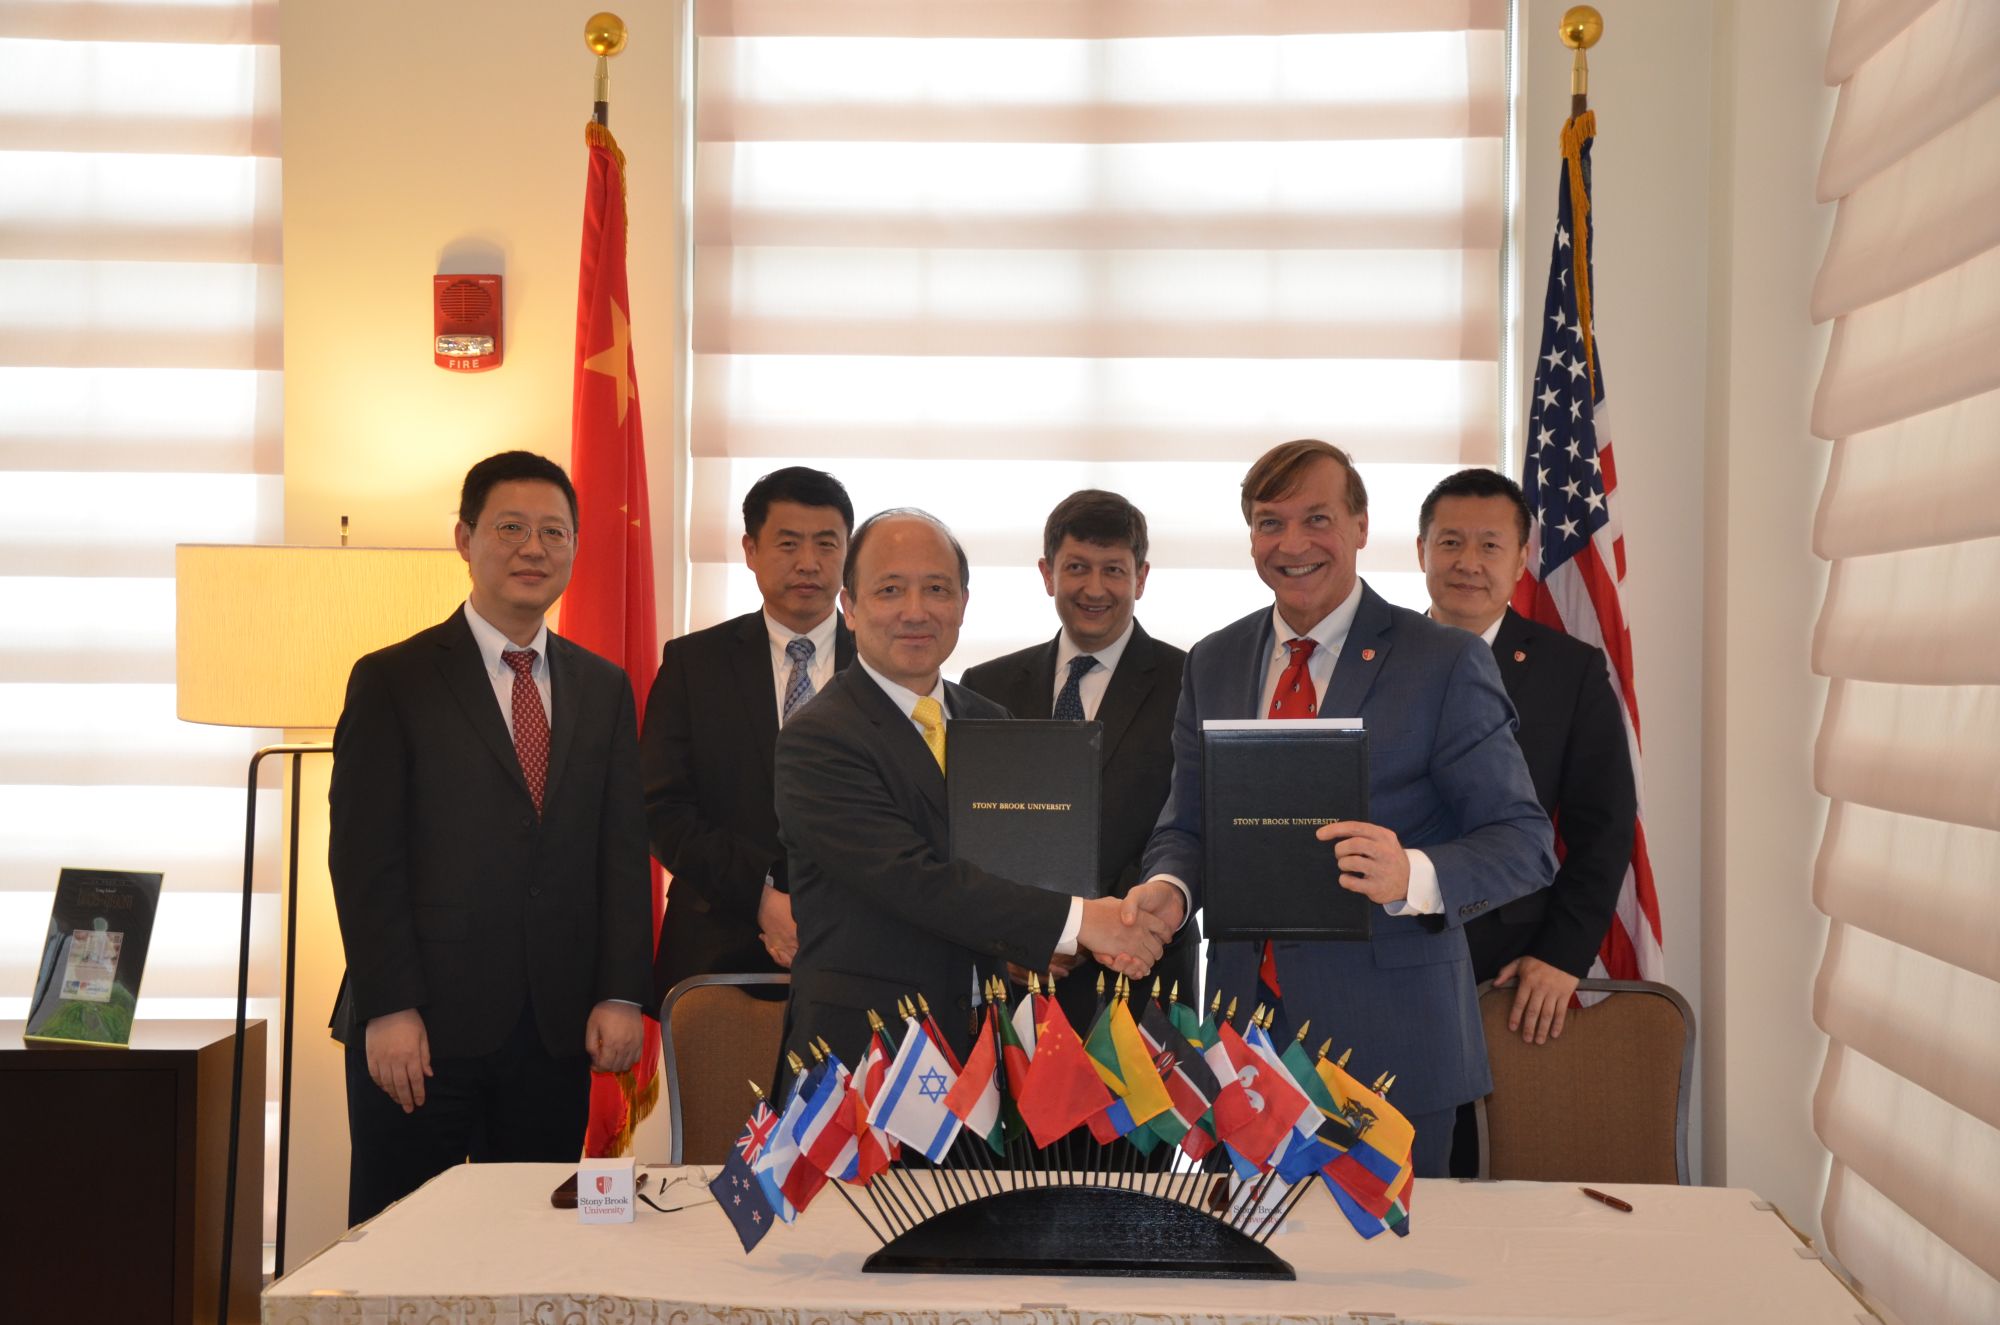 President Chen Shiyi Visits Temple University, University of Michigan and Stony Brook University